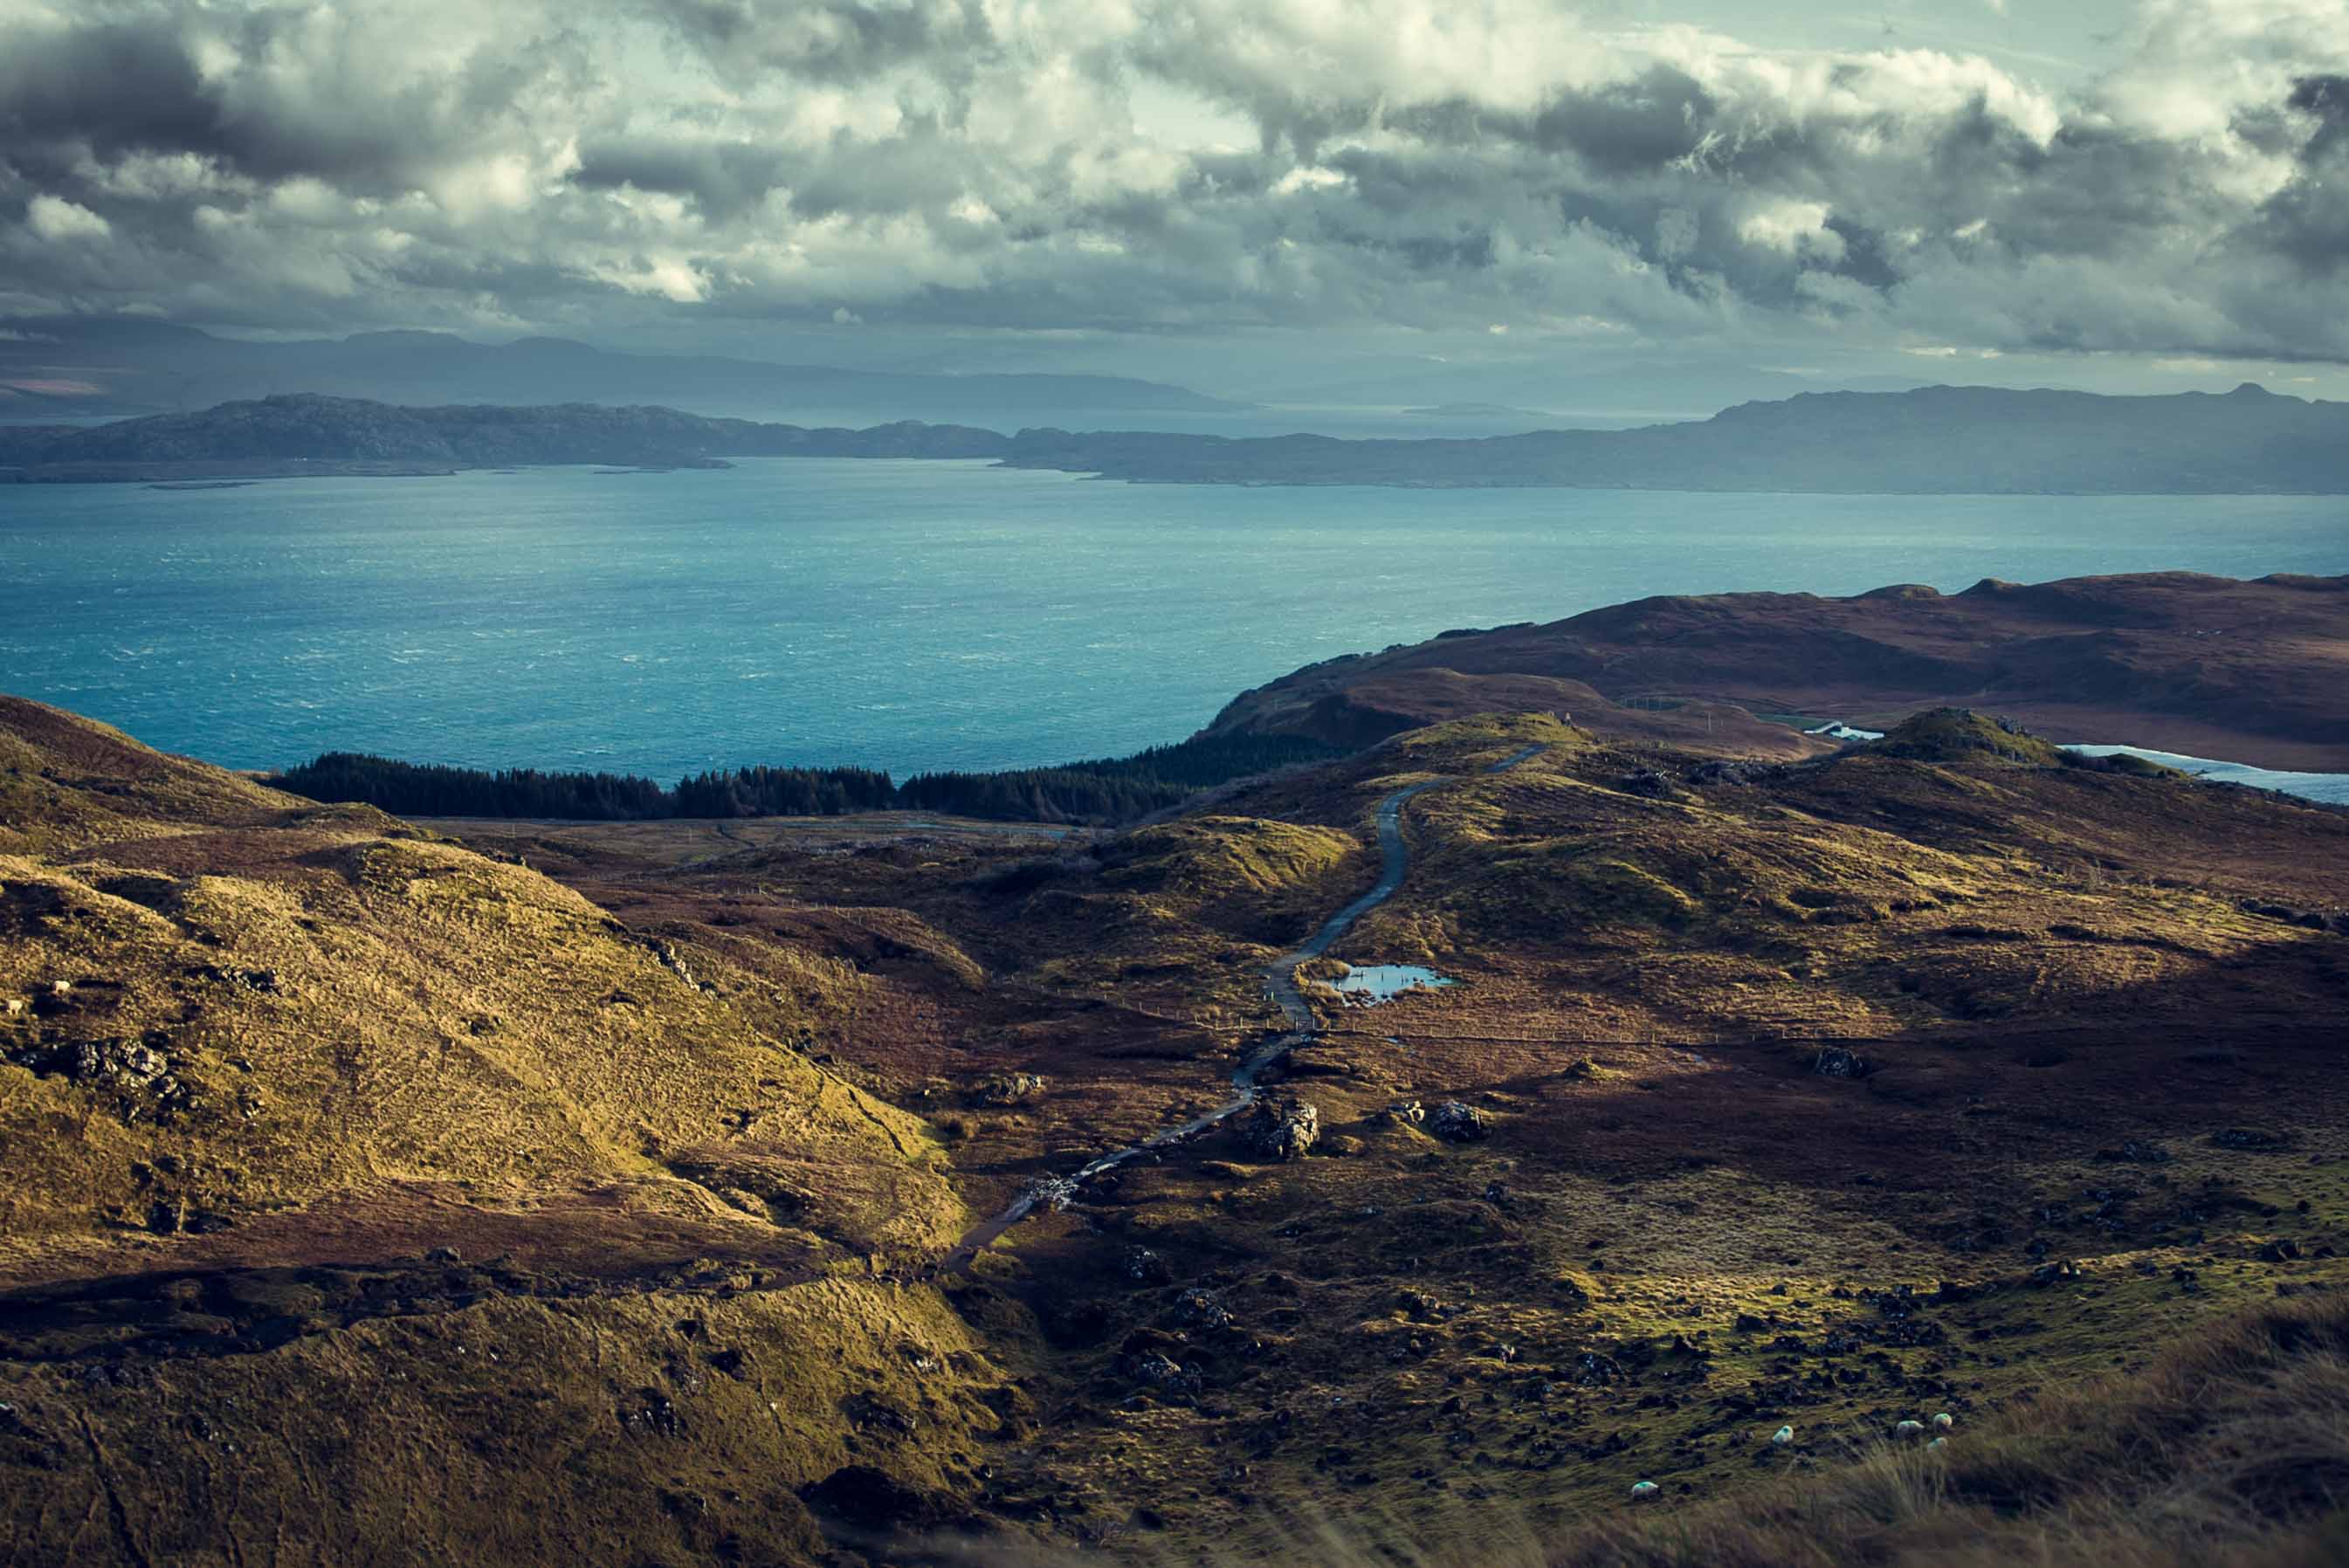 Écosse Scotland Inverness Ile de Skye montagne mer loch ness nessie